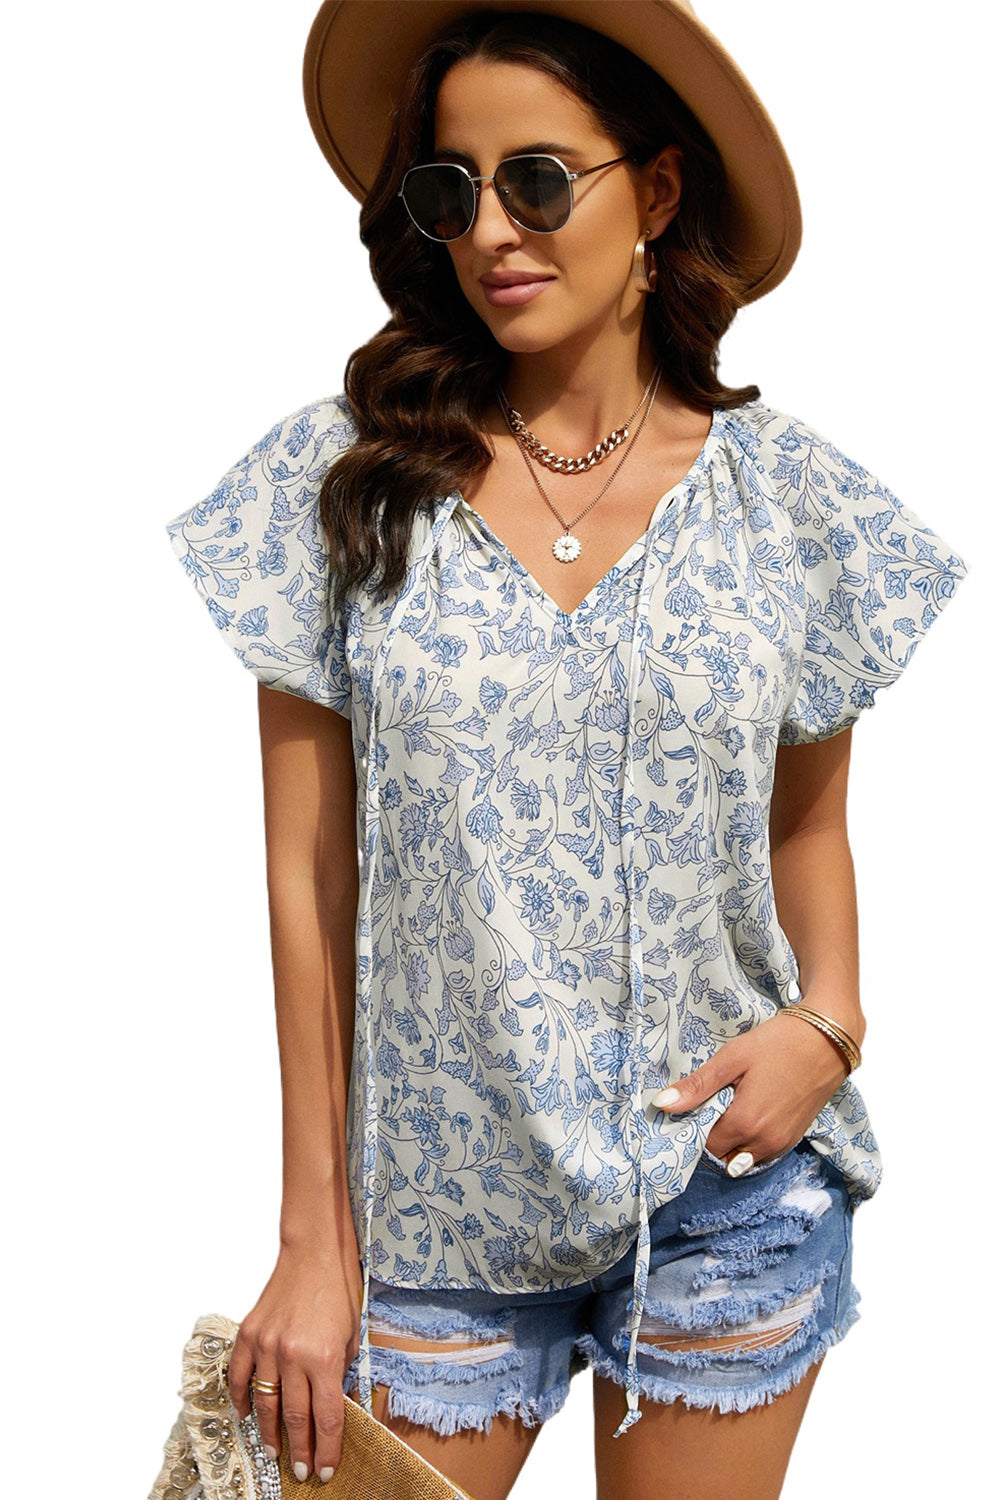 Sky Blue V Neck Short Sleeve Print Floral Blouses Shirts LC2514201-4